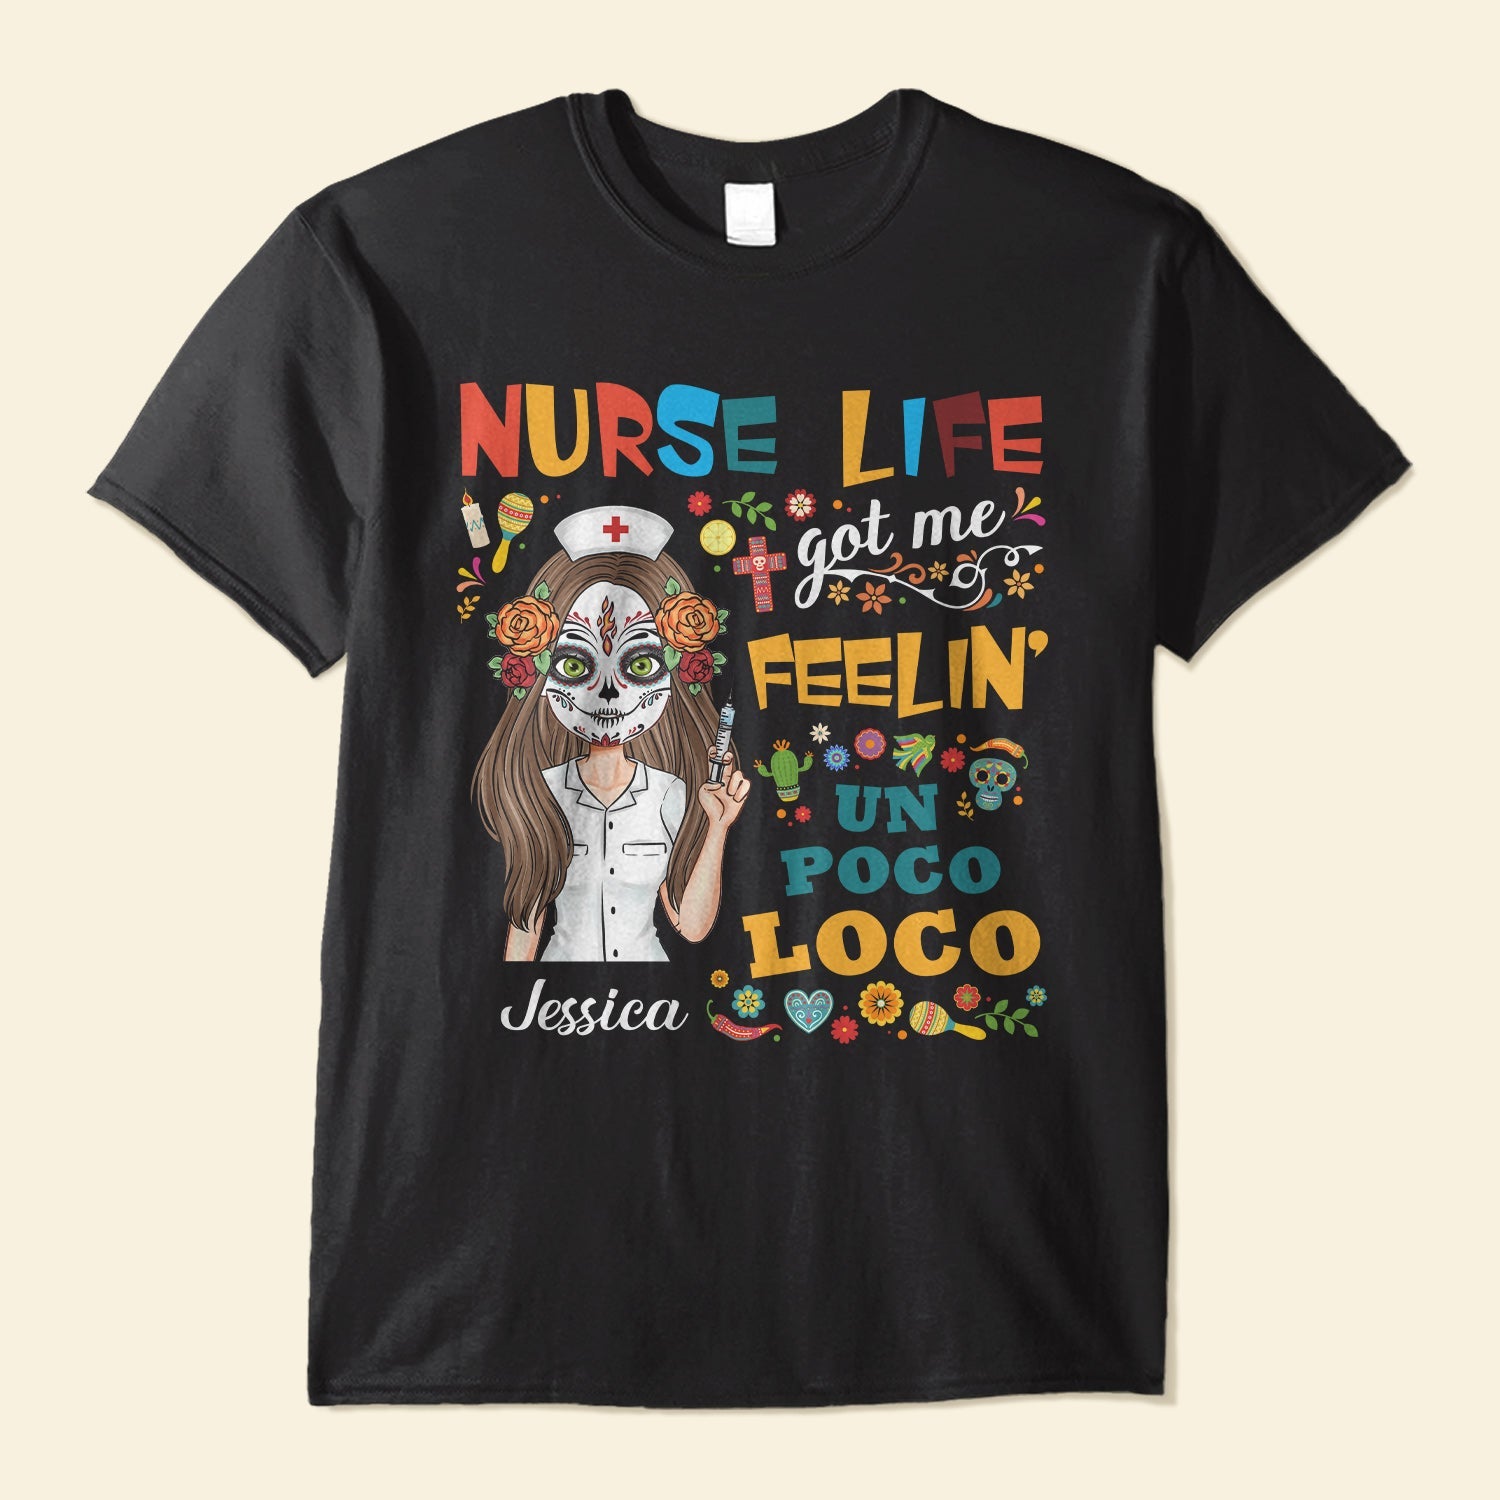 Hero Nurse Shirt Nurse T-shirt Nurse Tees Unisex Cute Nurse Shirts Nurse  Appreciation Gift Nurse Gift Idea Nurses Week Gift 